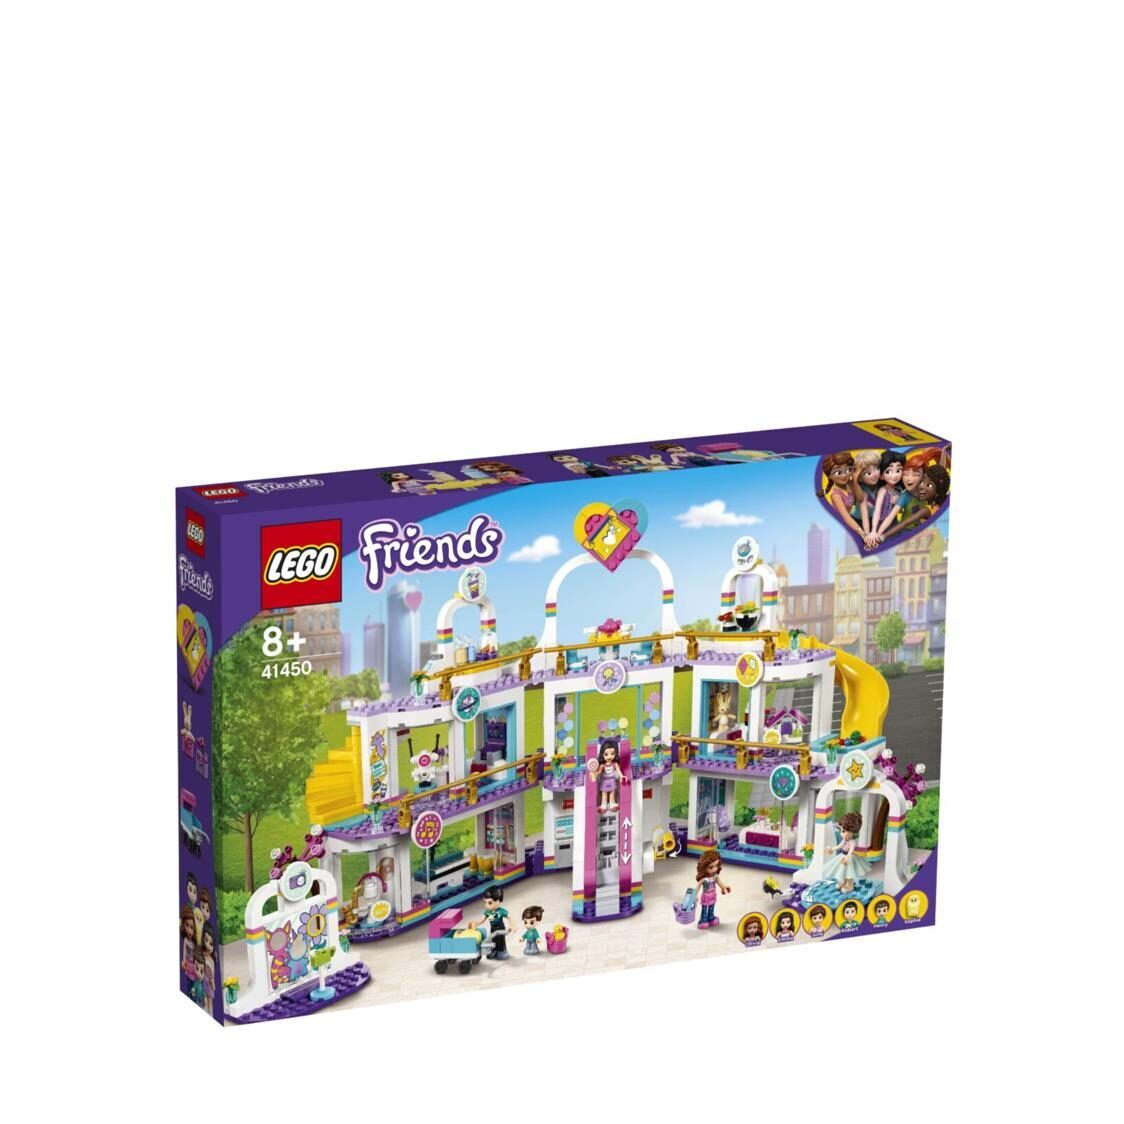 LEGO Friends - Heartlake City Shopping Mall 41450